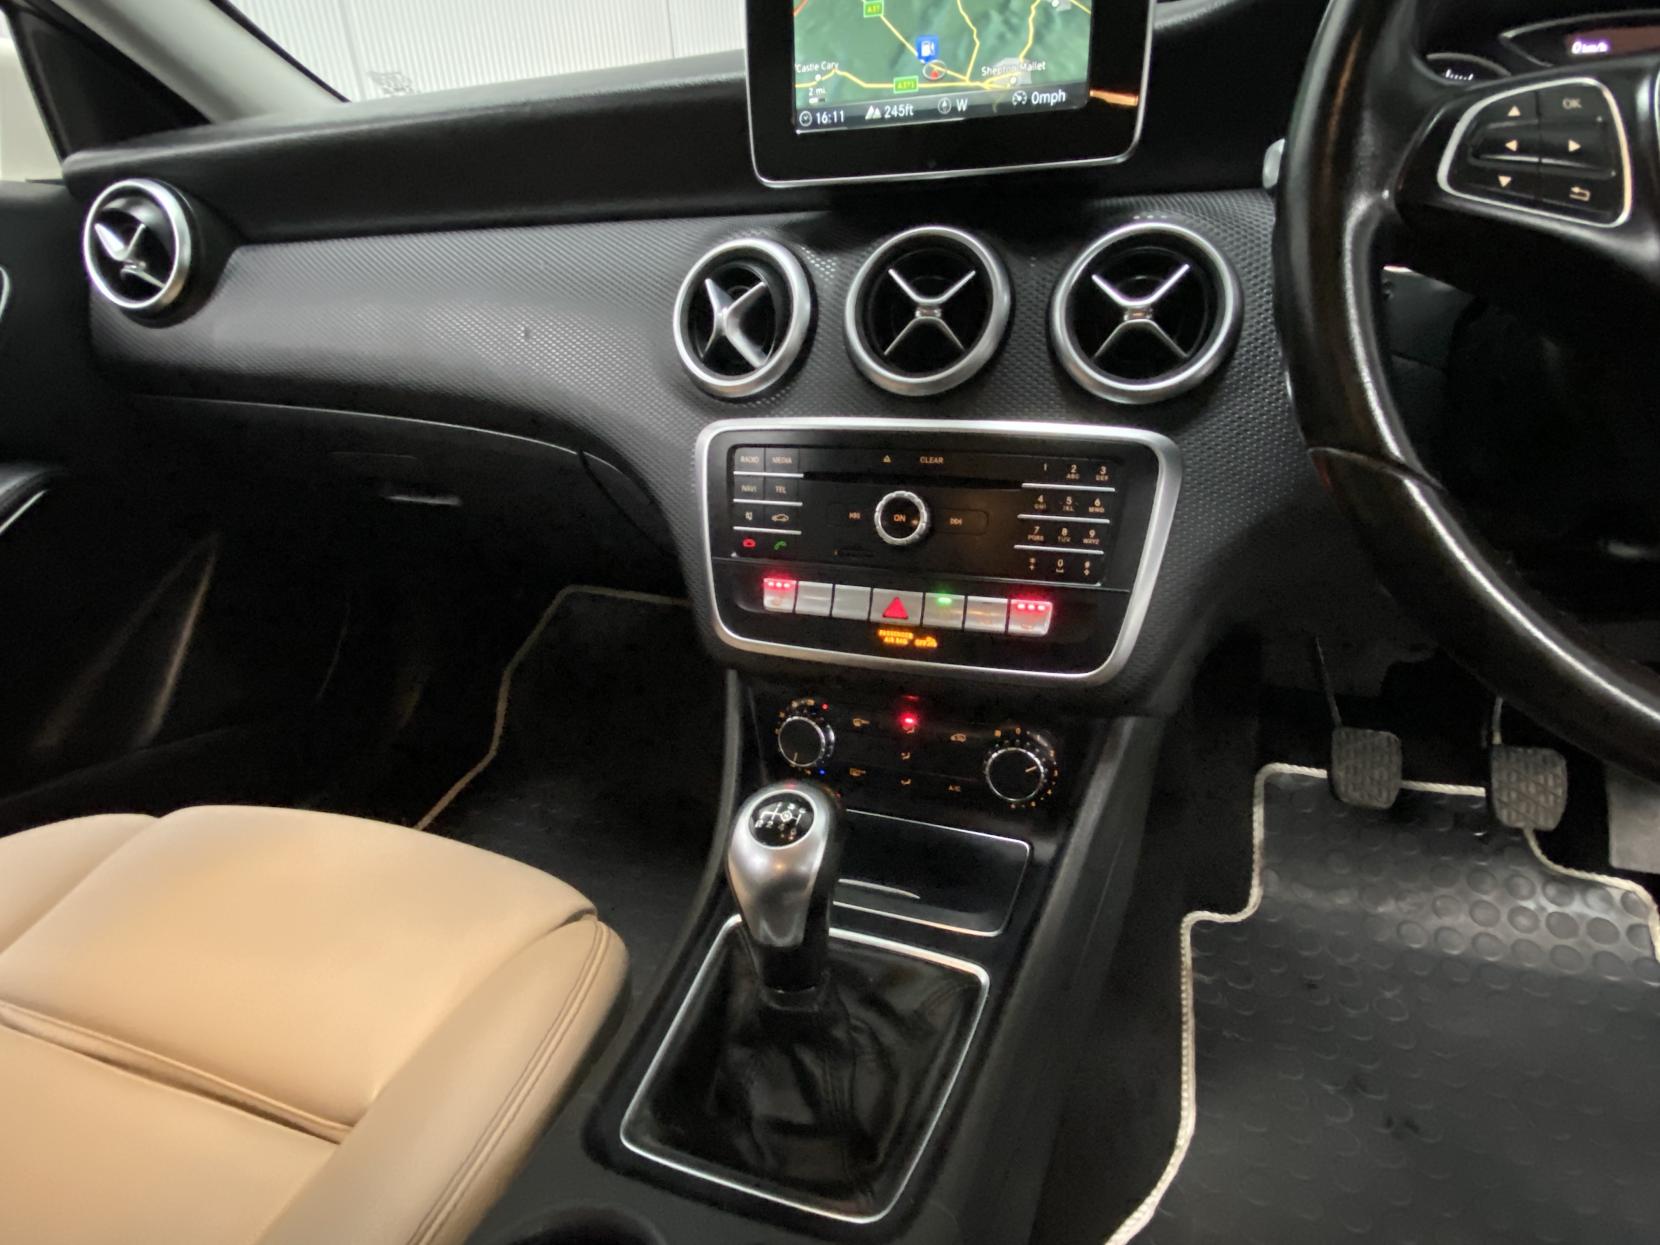 Mercedes-Benz A Class 2.1 A200d SE (Executive) Hatchback 5dr Diesel Manual Euro 6 (s/s) (136 ps)